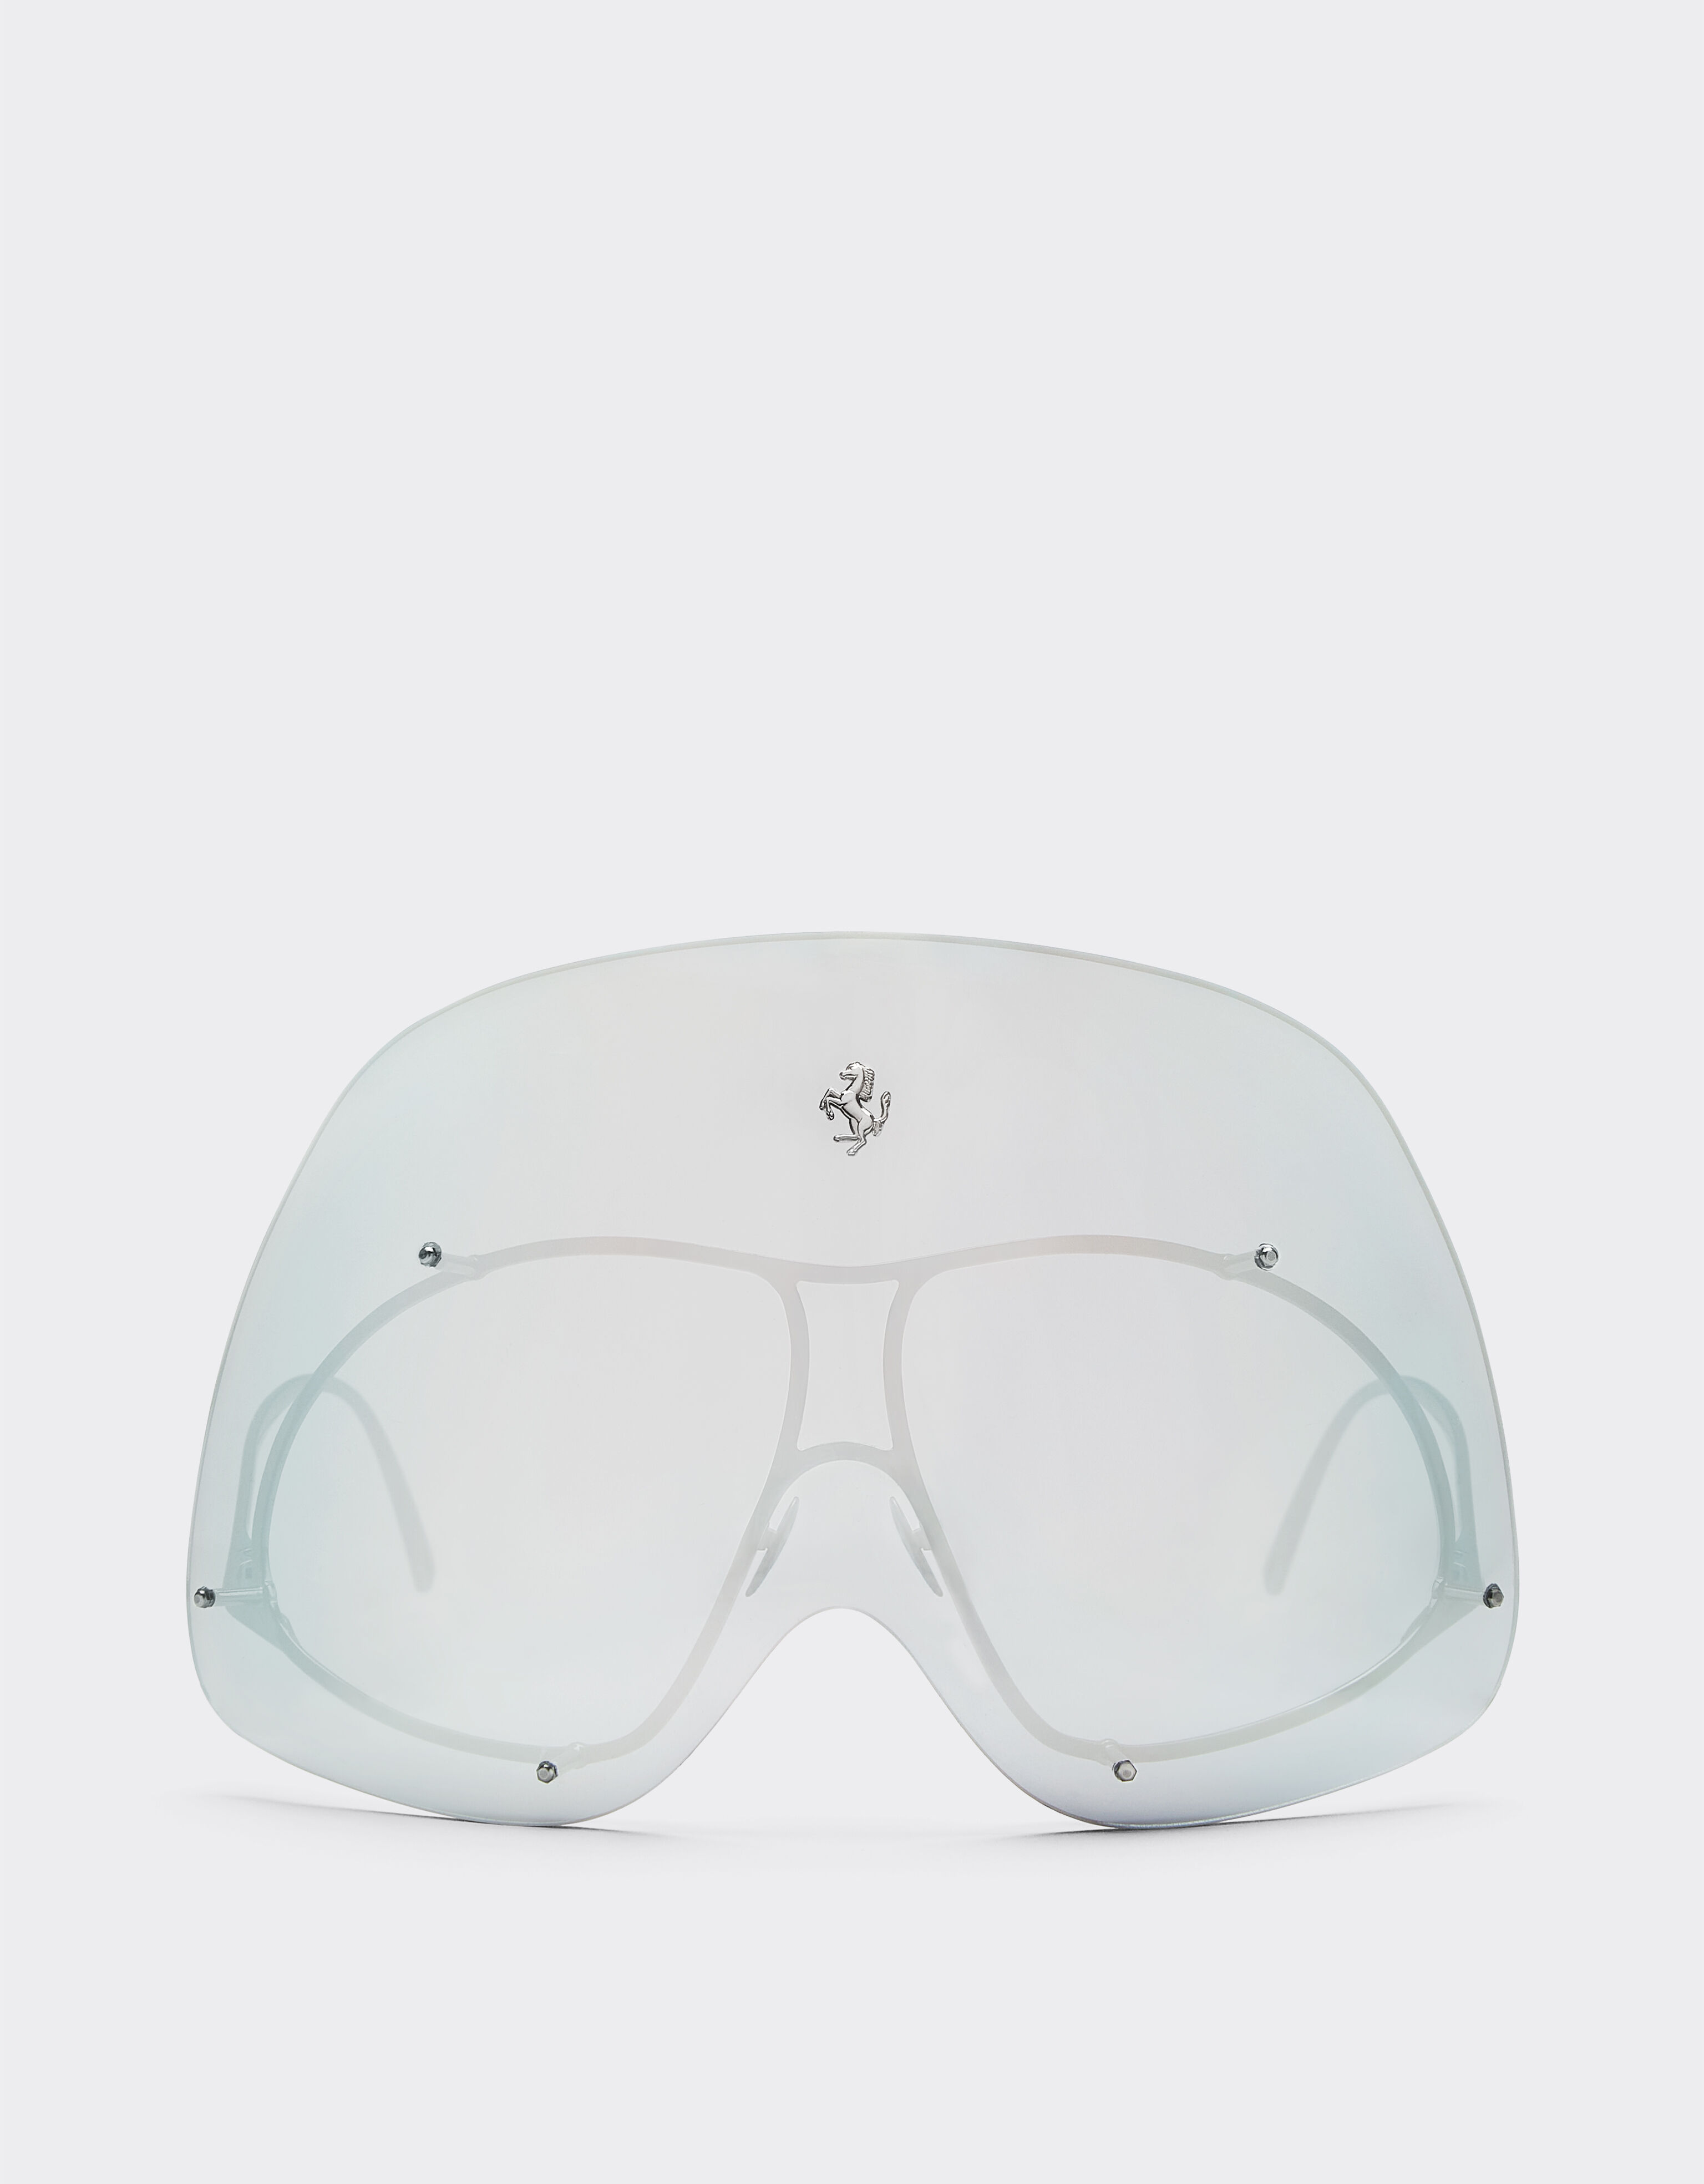 Ferrari Ferrari Limited Edition gunmetal sunglasses with mirrored shield Black F1201f